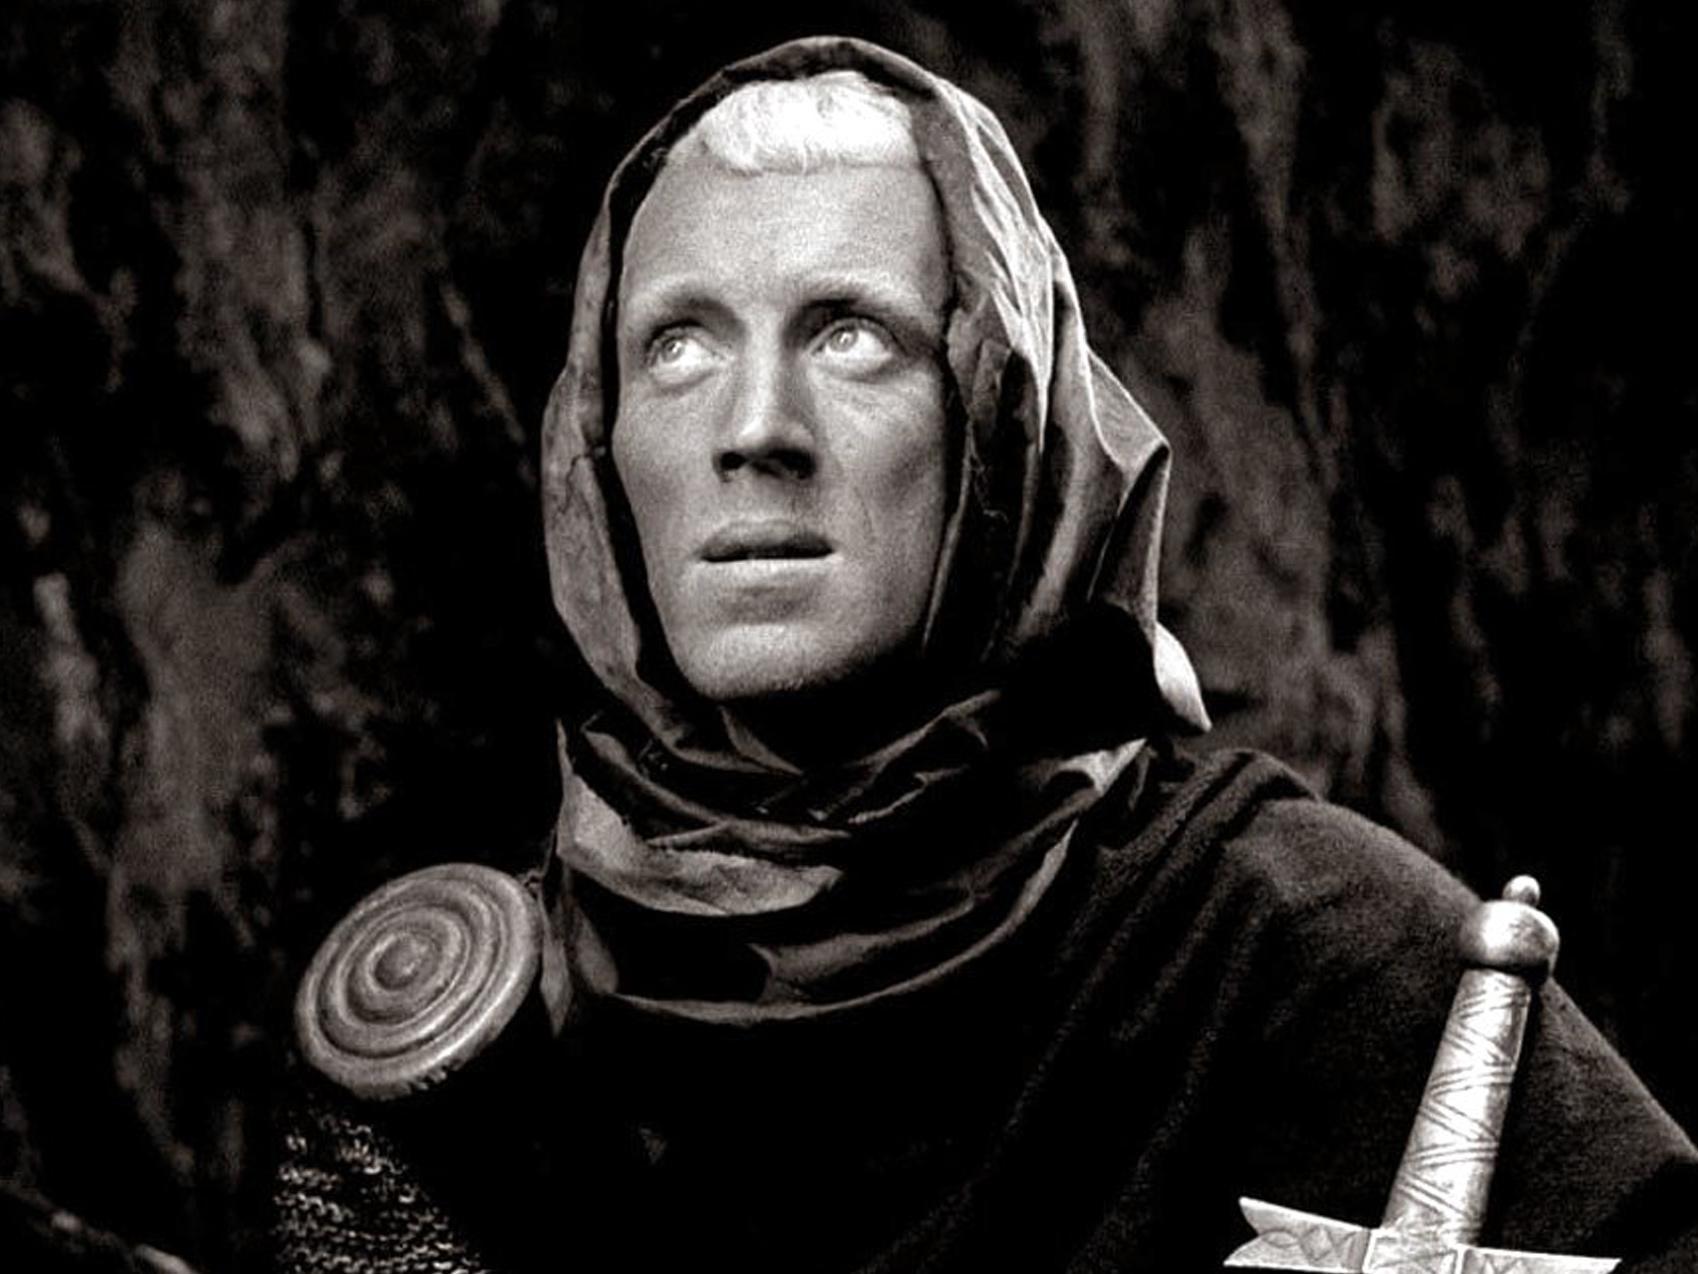 Von Sydow in Ingmar Bergman’s ‘The Seventh Seal’